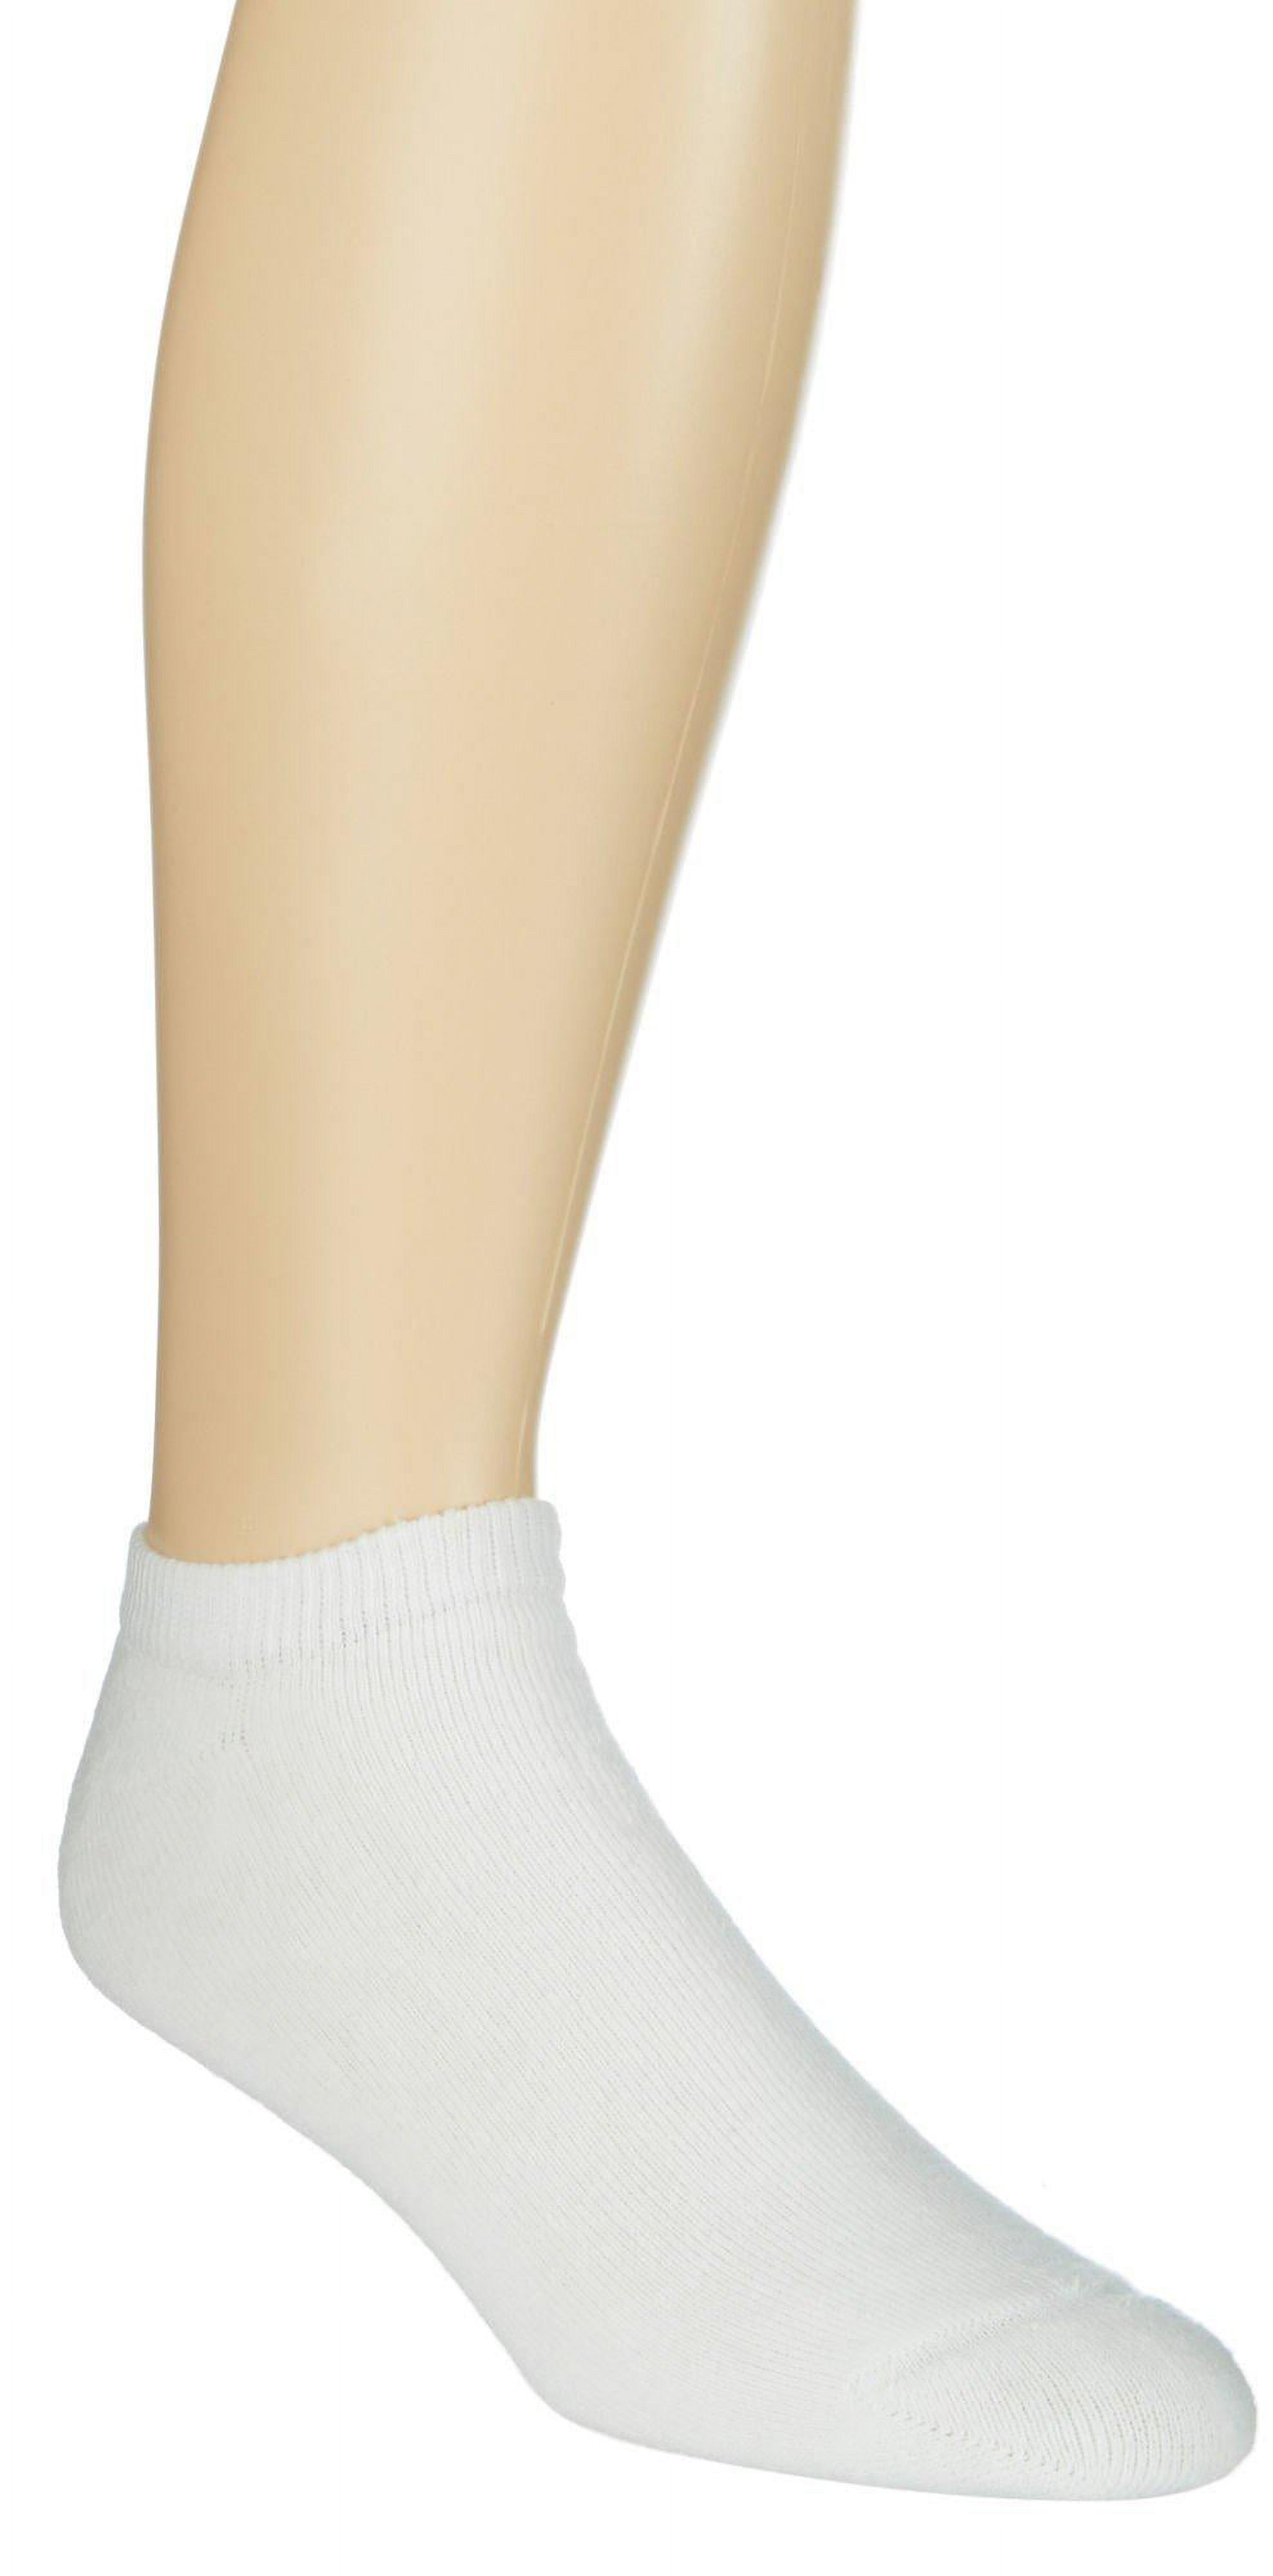 CL90 Men's No Show Socks Shoe Size 6-12 - 6 pairs - White - Grey Toe/Heel - image 2 of 2